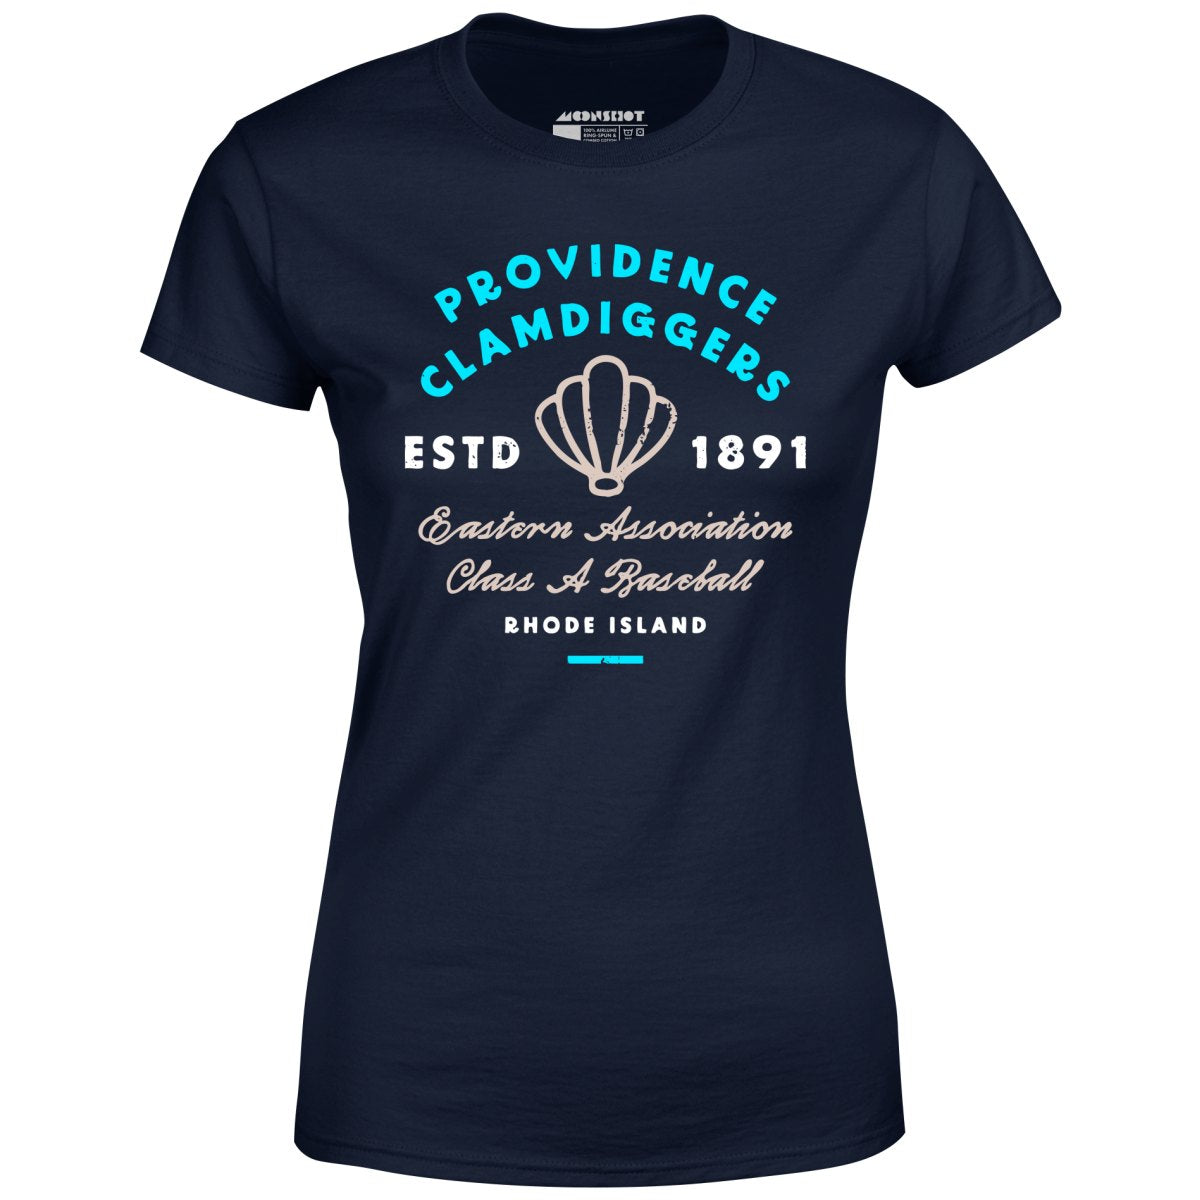 Providence Clamdiggers - Rhode Island - Vintage Defunct Baseball Teams - Women's T-Shirt